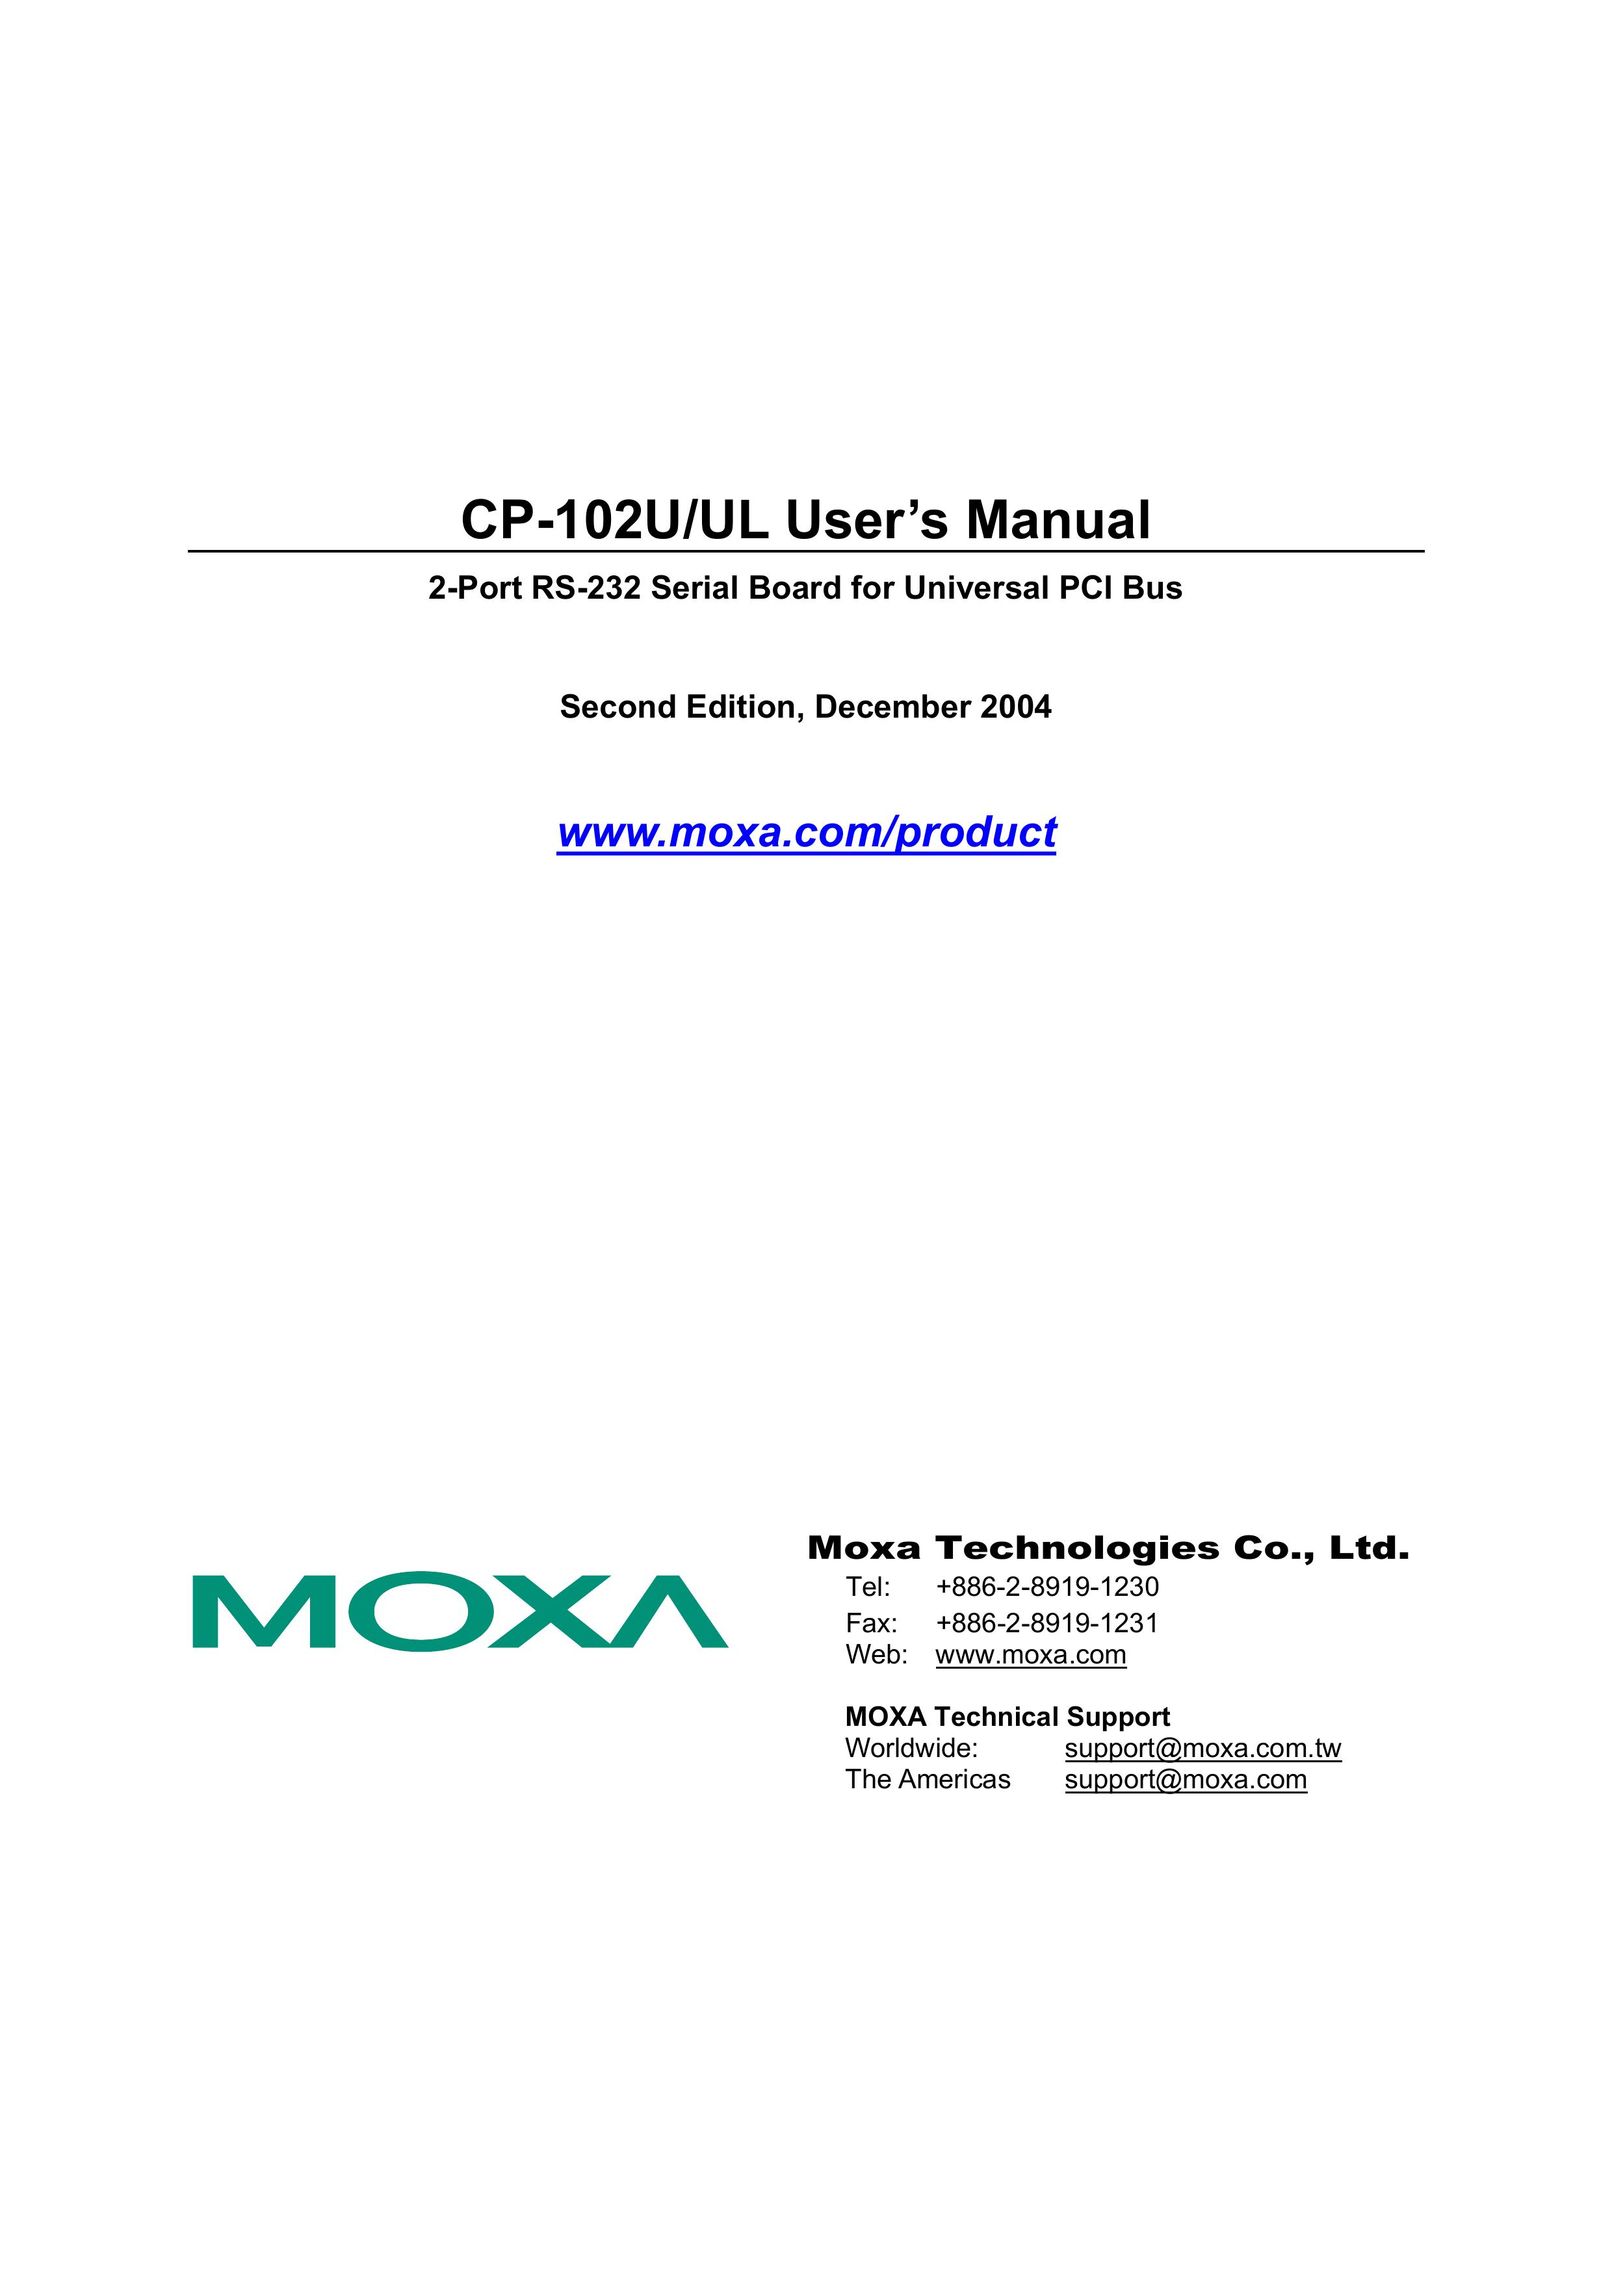 Moxa Technologies CP-102U/UL Network Card User Manual